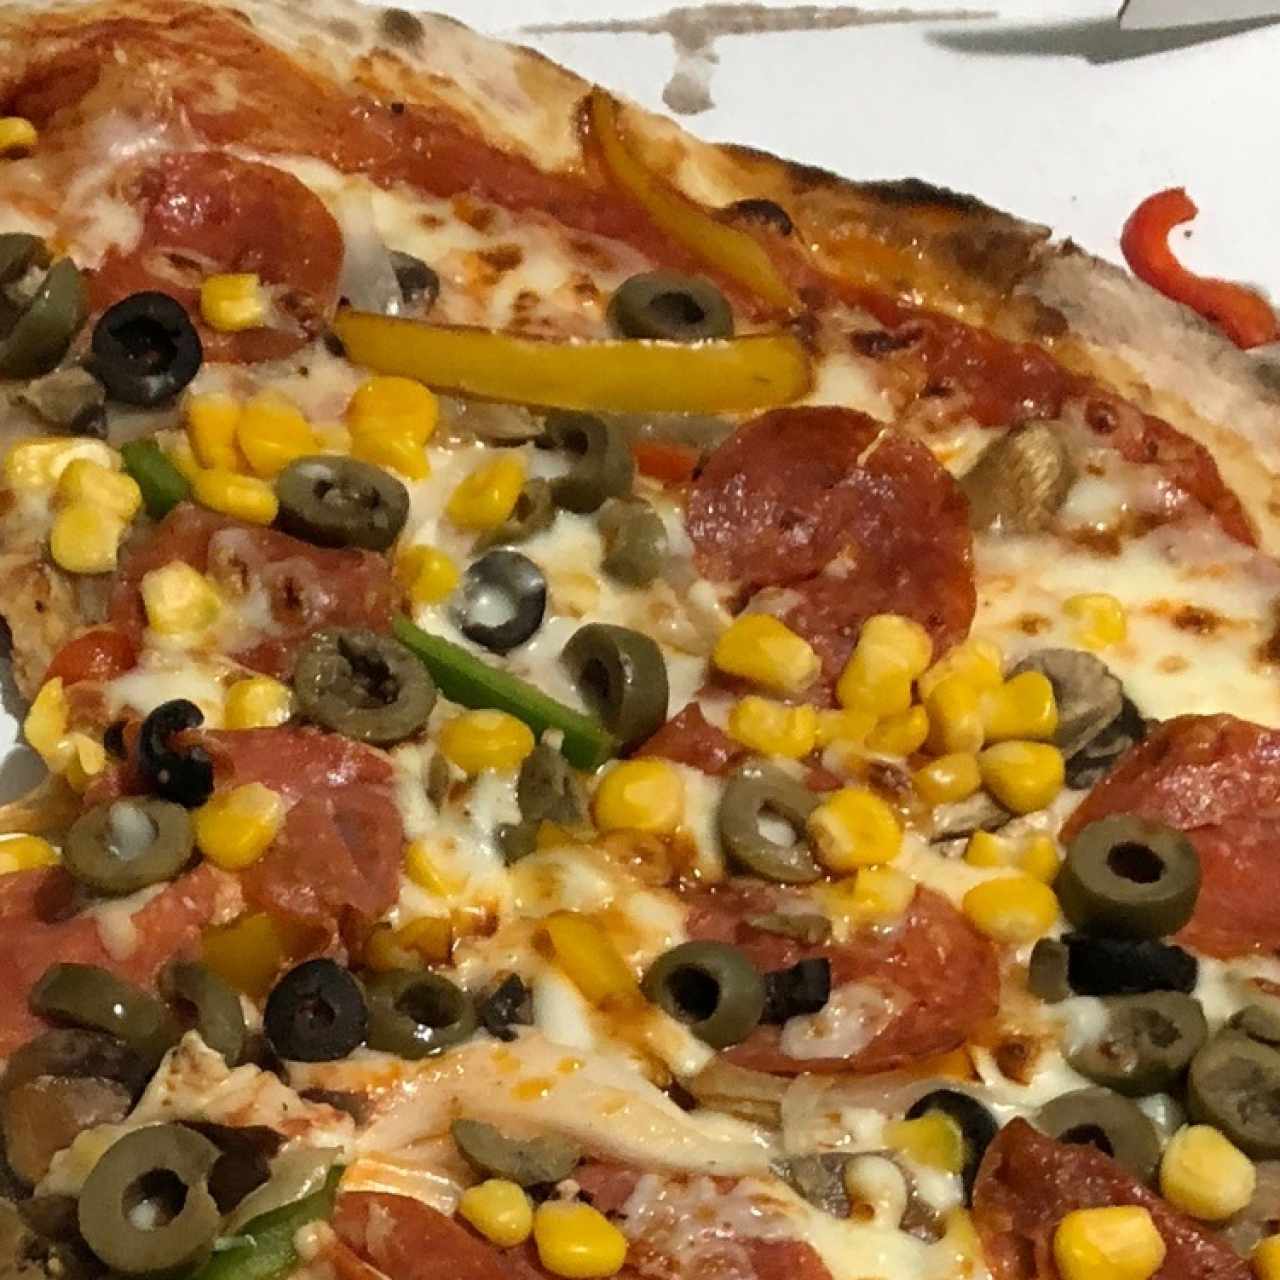 Pizza Vegetariana con extra de peperonni